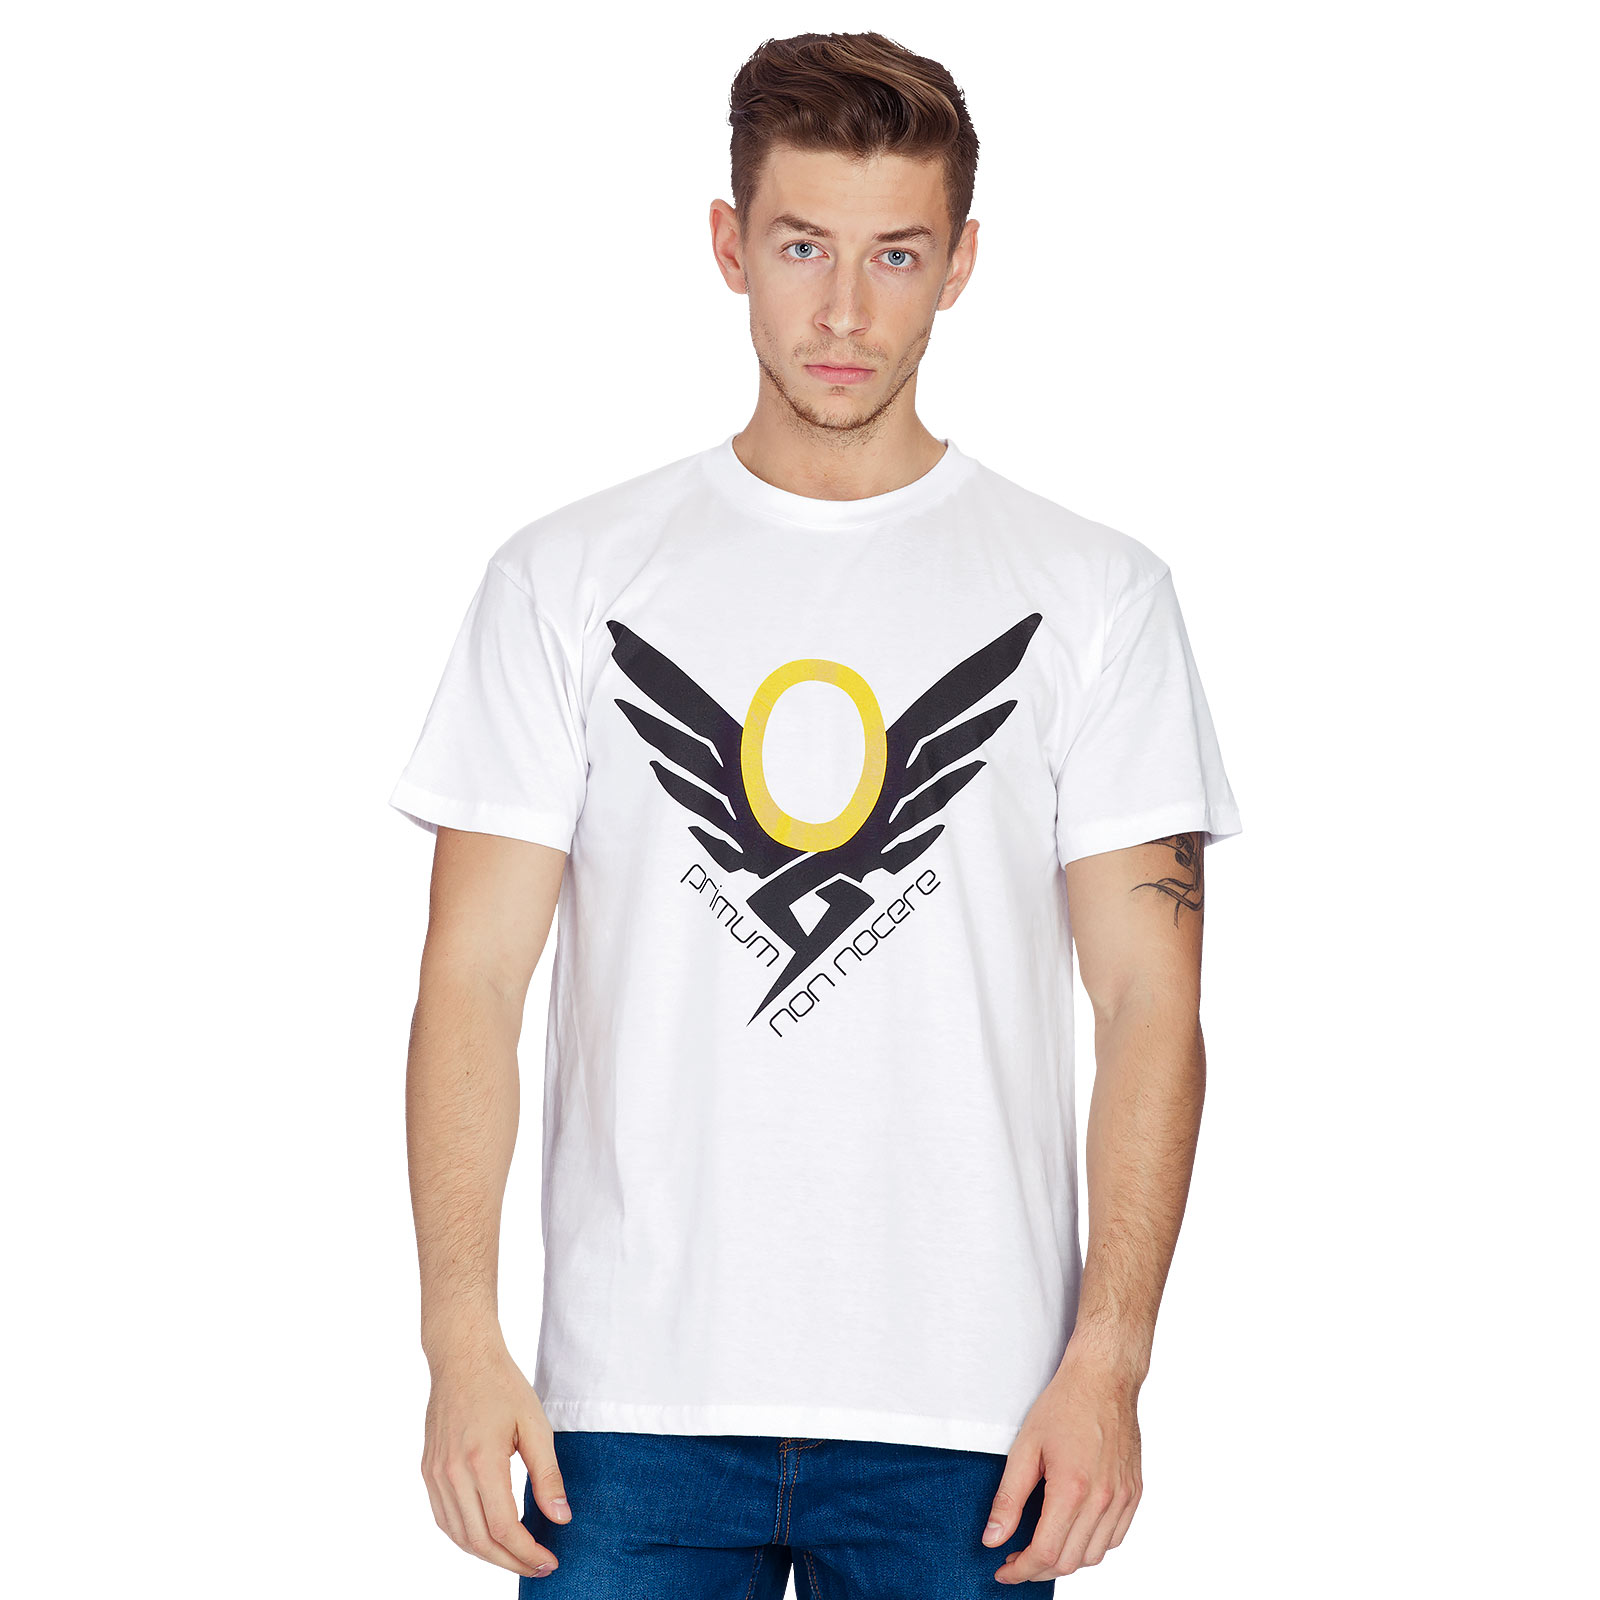 Overwatch - T-shirt Mercy blanc